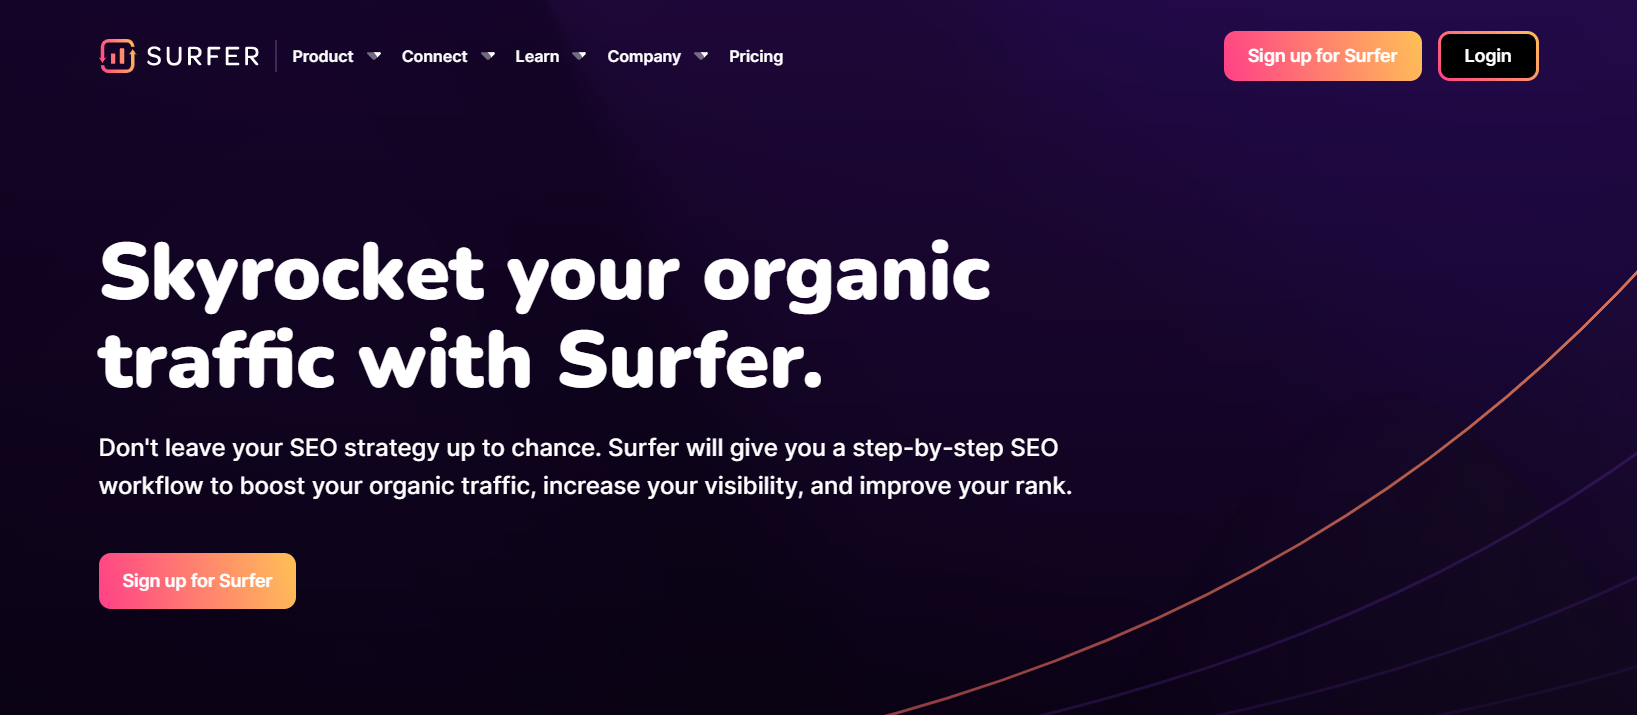 surfer seo tool homepage